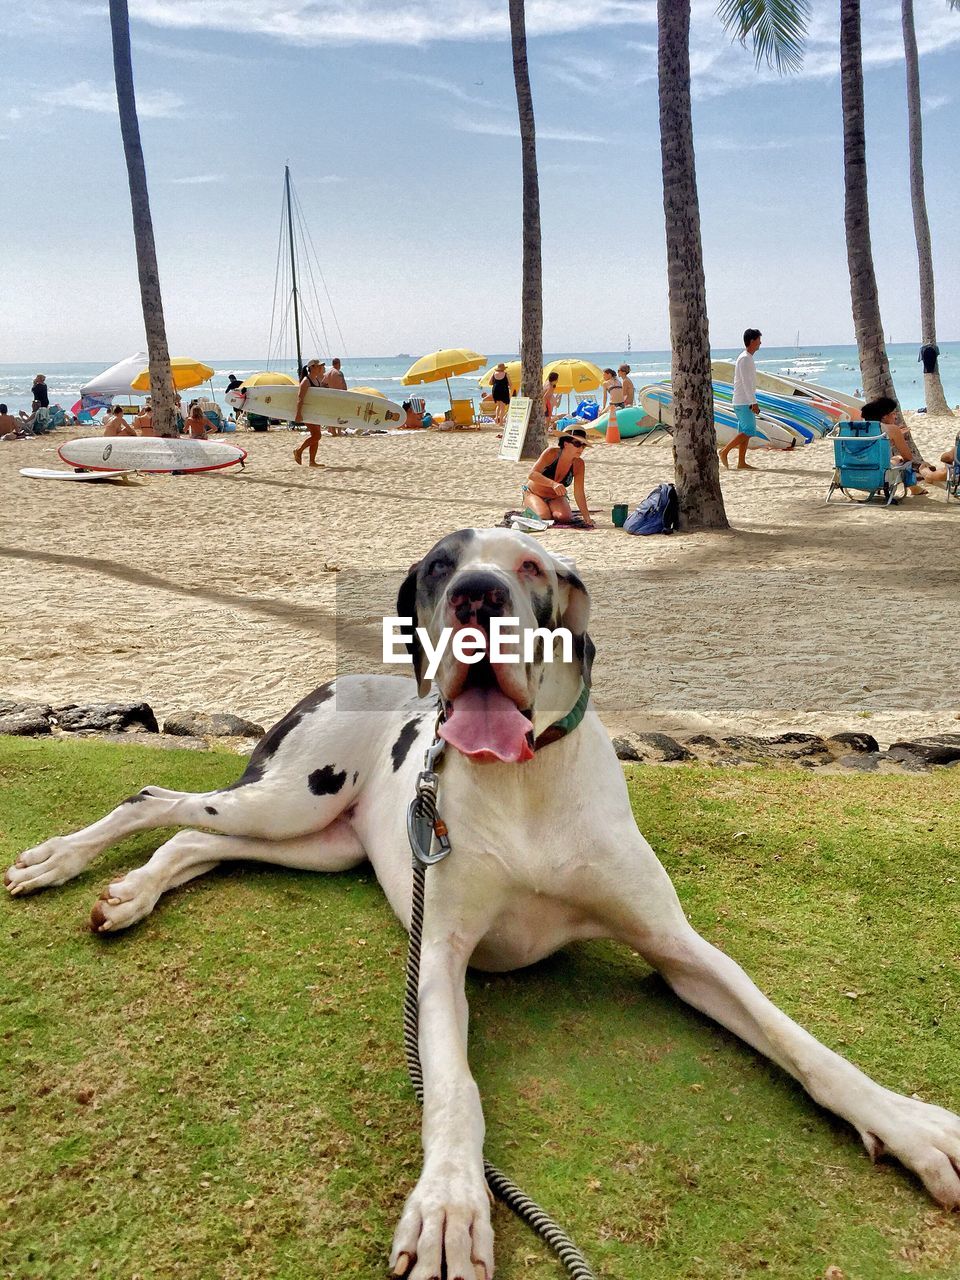 CLOSE-UP OF DOG SITTING ON BEACH